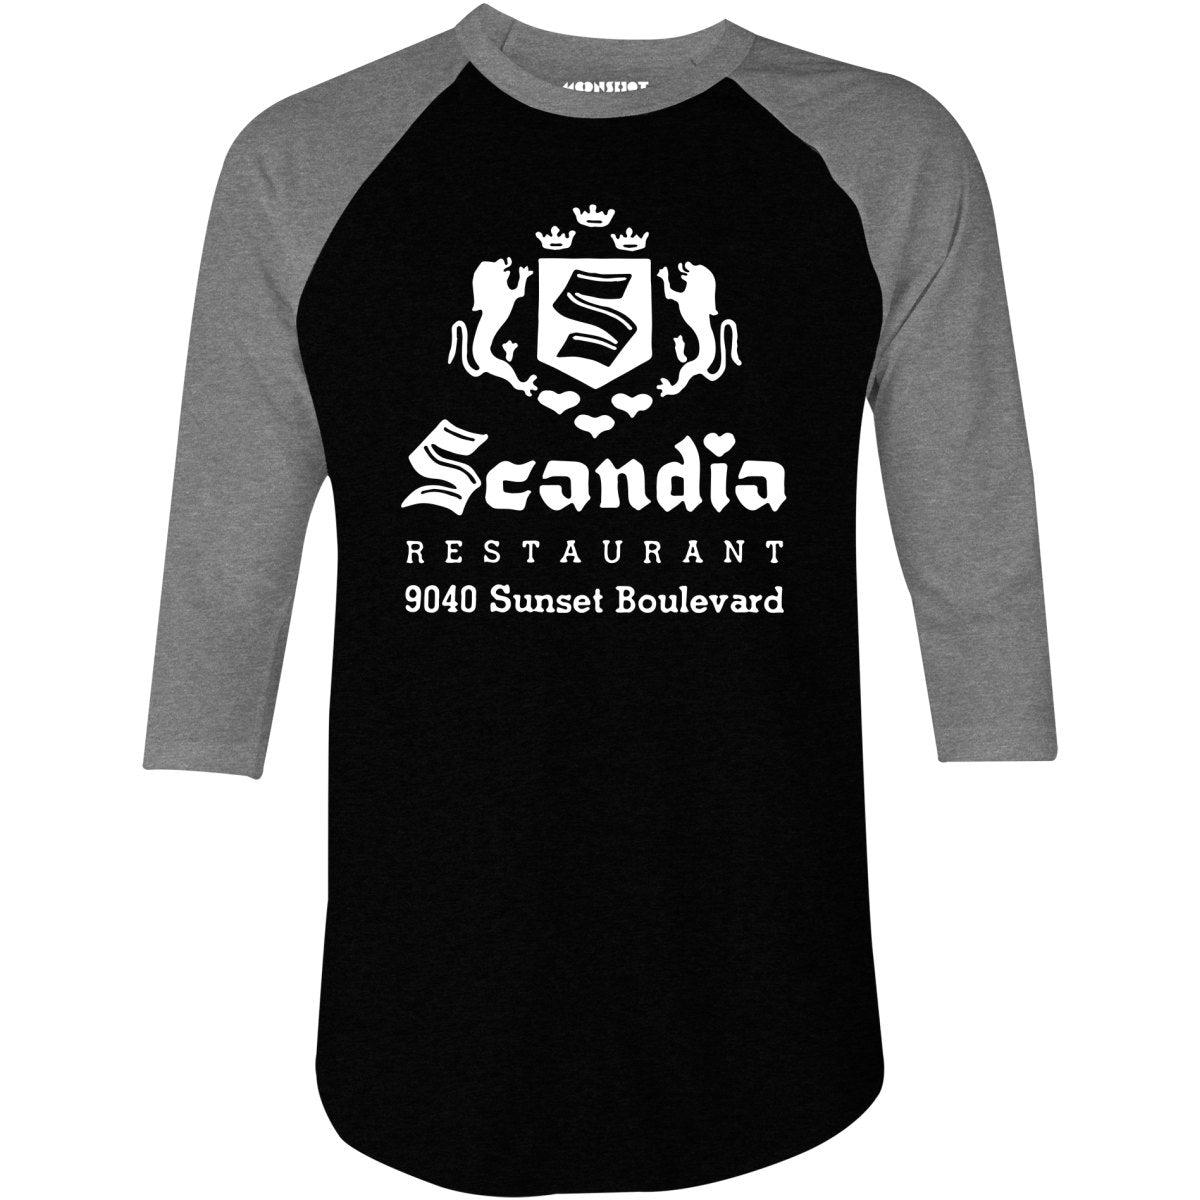 Scandia - West Hollywood, CA - Vintage Restaurant - 3/4 Sleeve Raglan T-Shirt